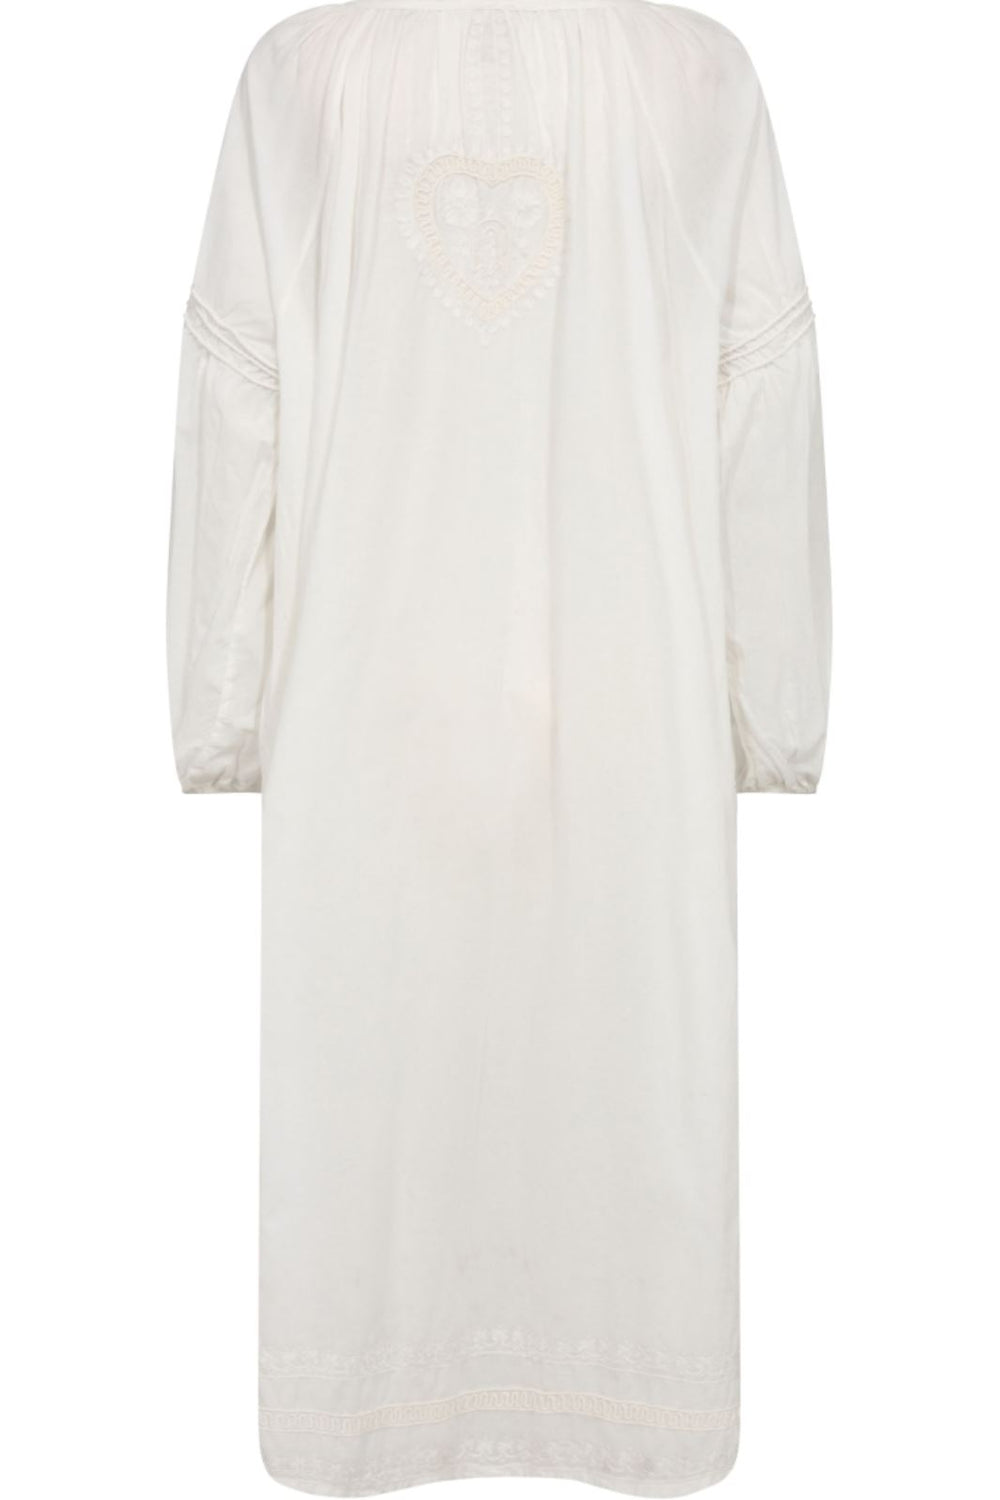 Gossia - ZiraGO Dress - Off-white Kjoler 